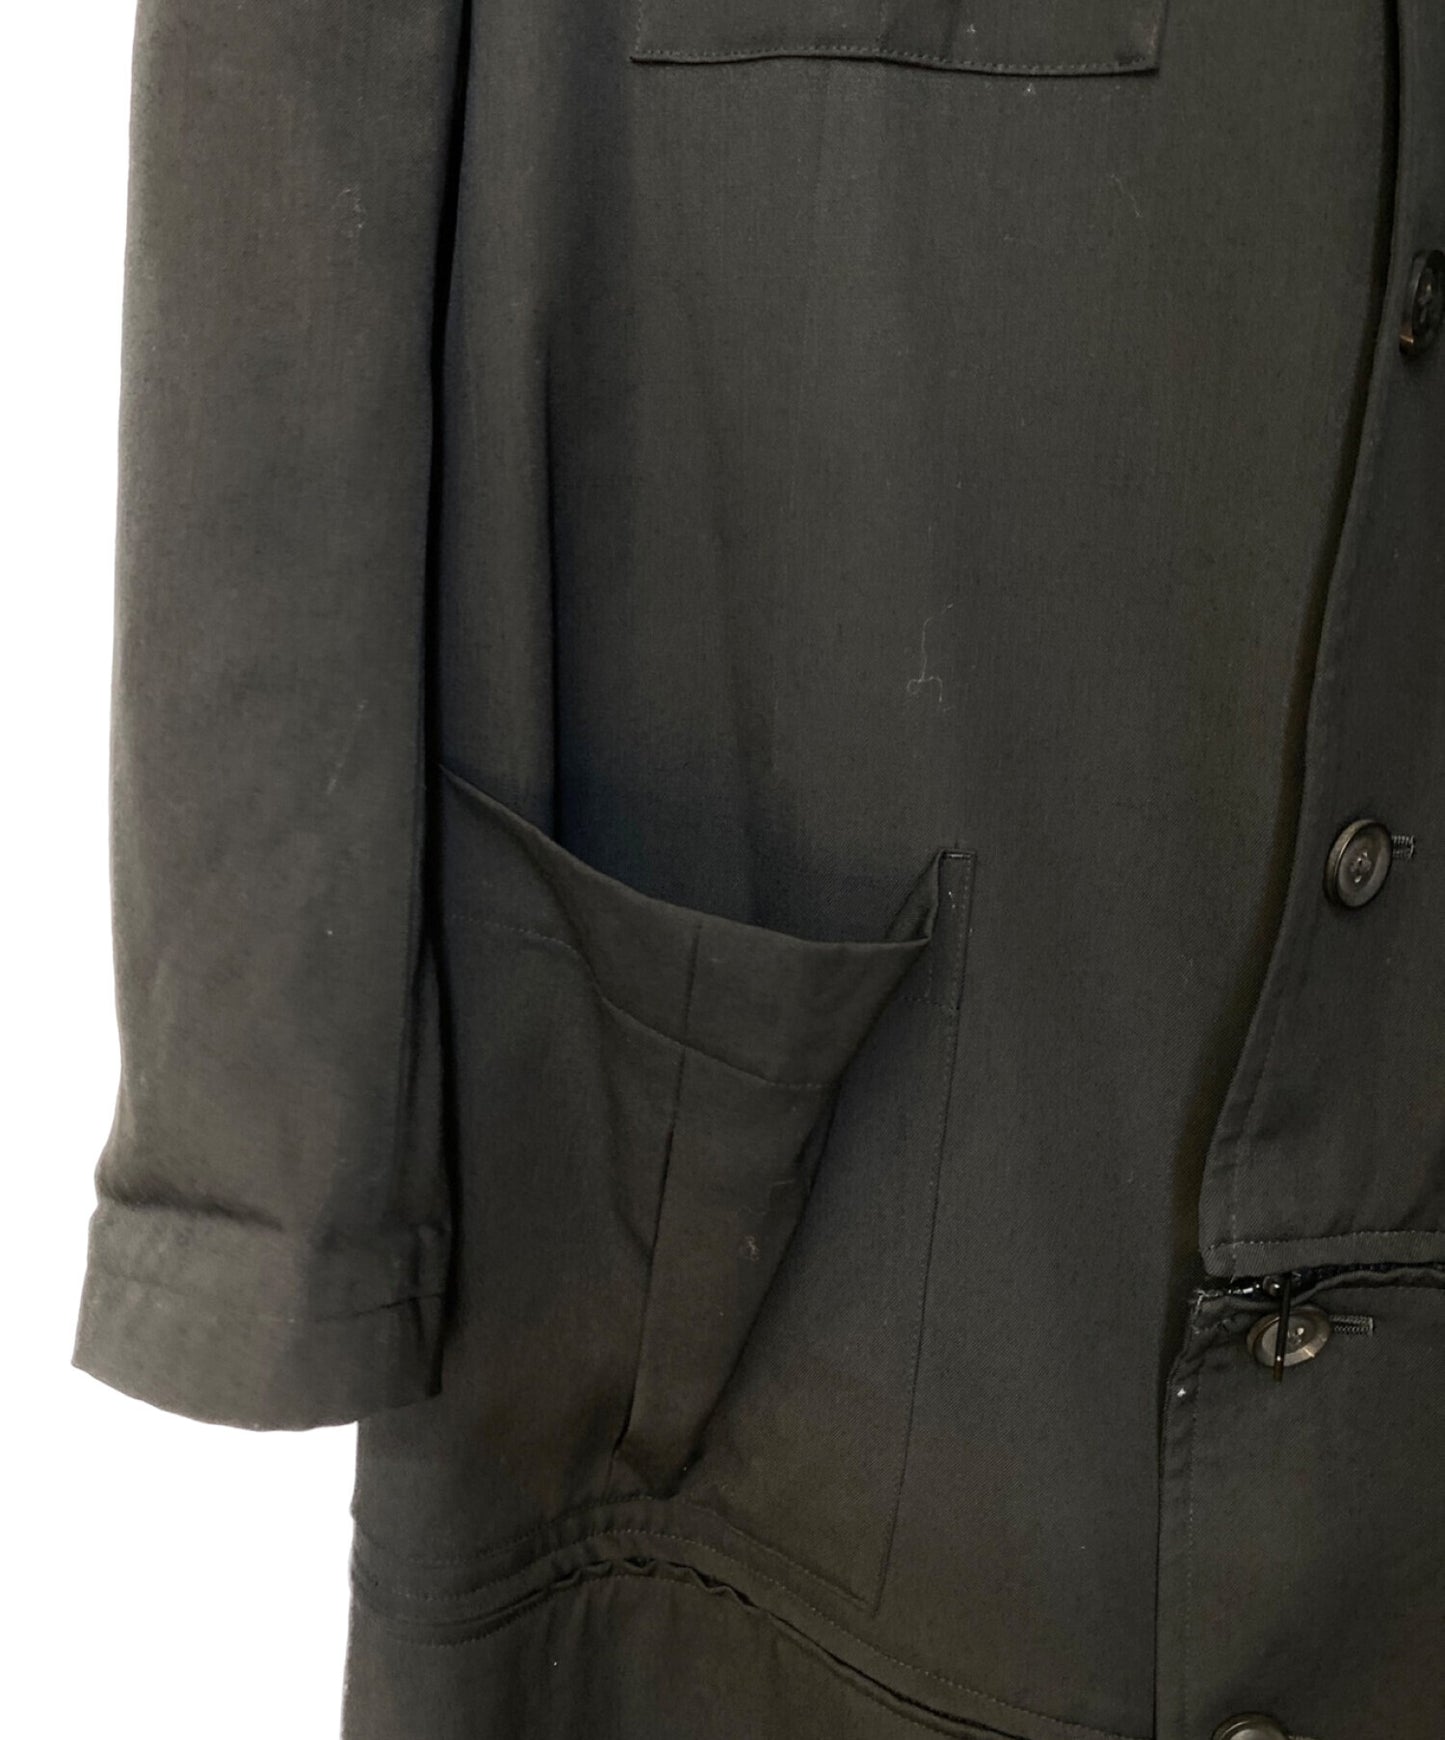 Yohji Yamamoto Pour Homme Wool Gaber Stand Zipper夹克HC-J16-100